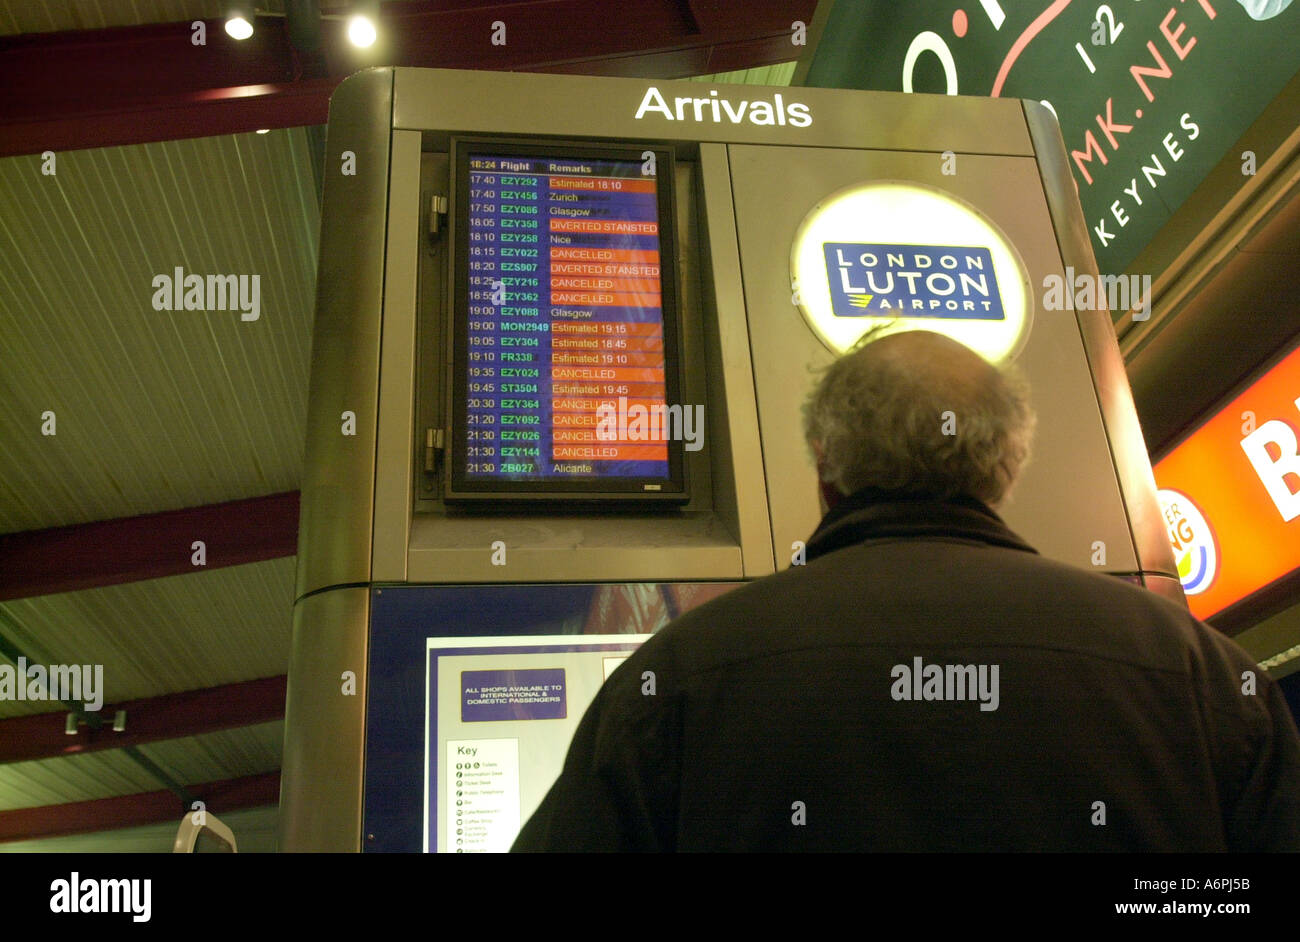 Passenger checks the arrivals board at Luton airport UK Stock Photo